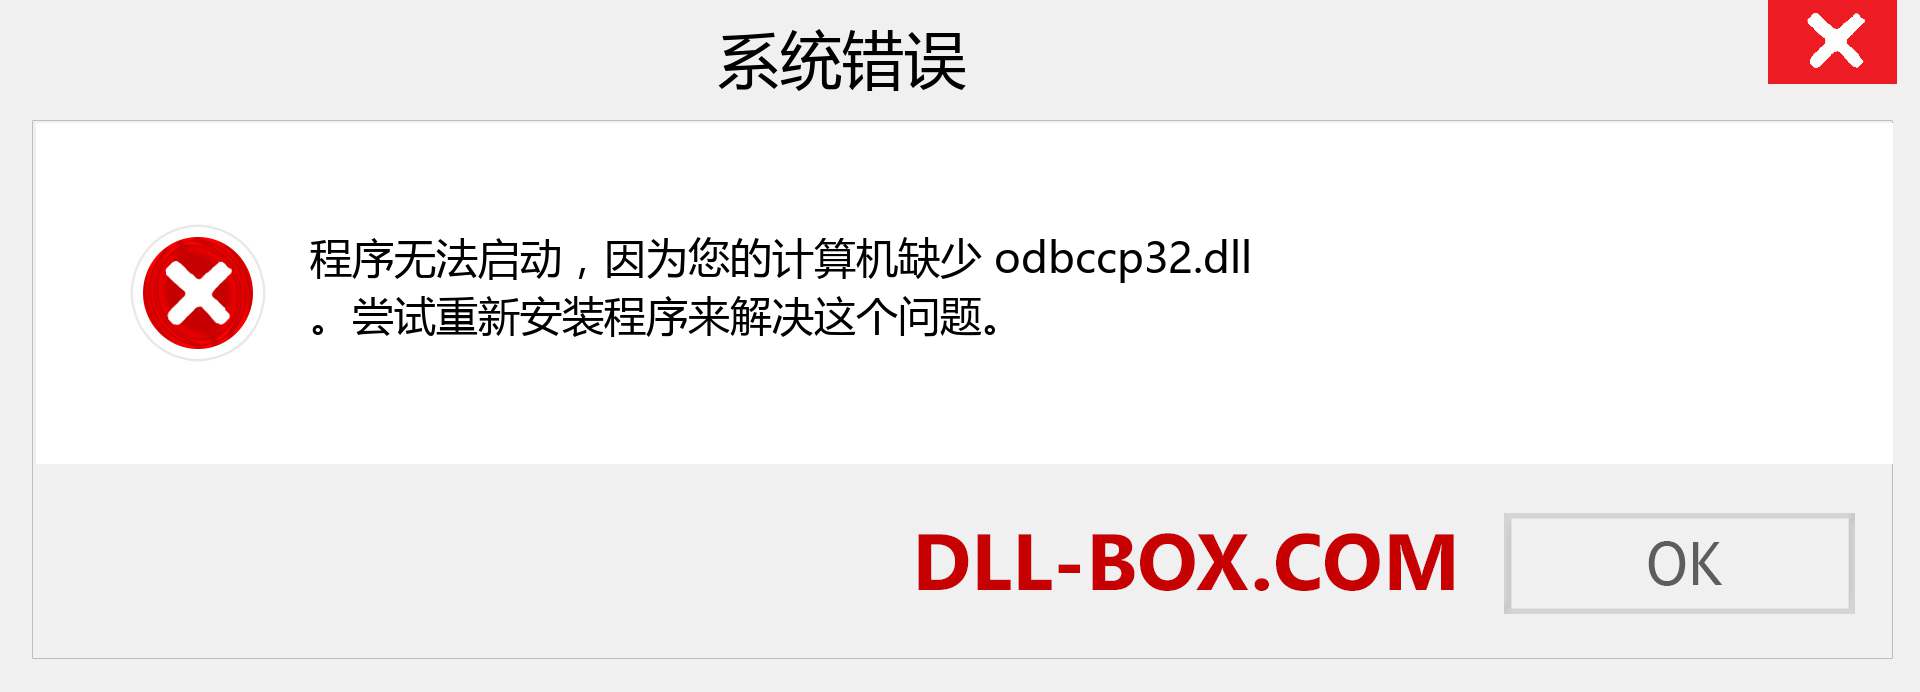 odbccp32.dll 文件丢失？。 适用于 Windows 7、8、10 的下载 - 修复 Windows、照片、图像上的 odbccp32 dll 丢失错误